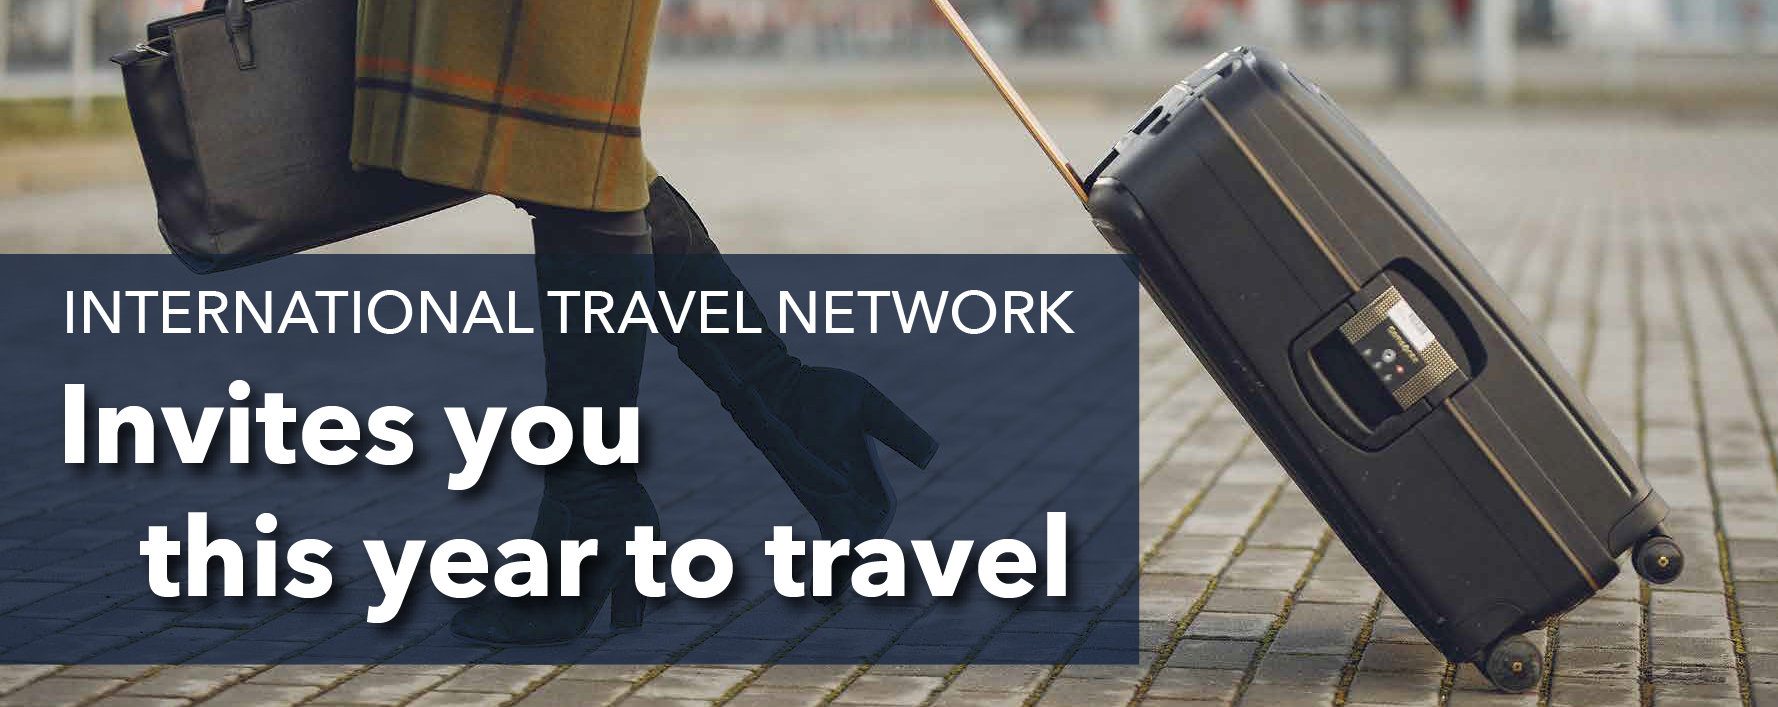 international travel network services